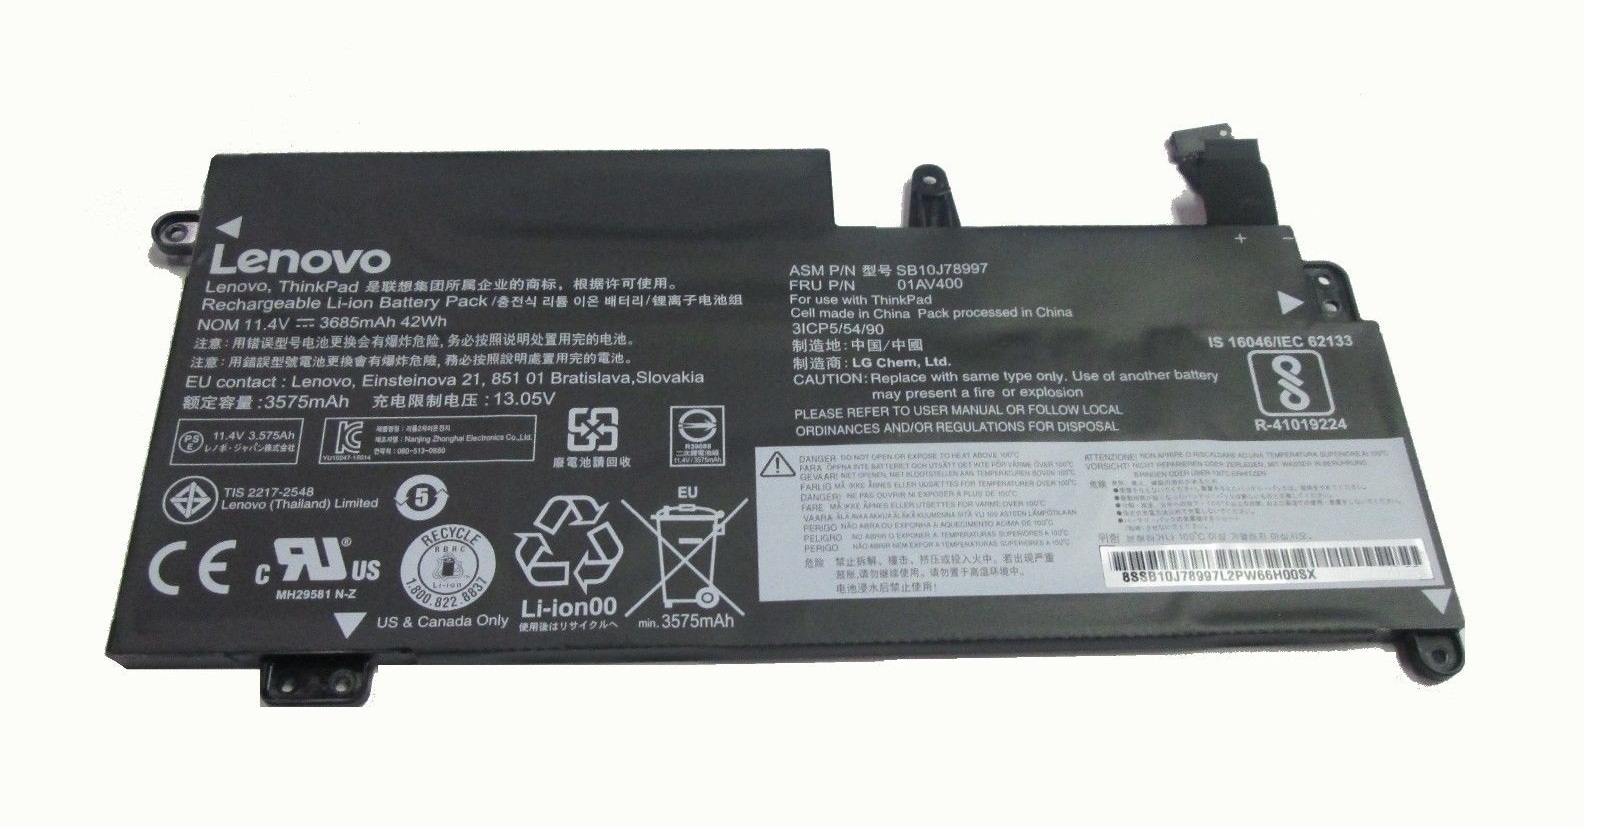 Lenovo батарея купить. Аккумулятор (батарея) для ноутбука Lenovo s10-2. Батарея для ноутбука леново tis 2217-2548. Tis 2217-2548 аккумулятор для Lenovo. Аккумулятор Lenovo THINKPAD 11,25v 42,5wh.